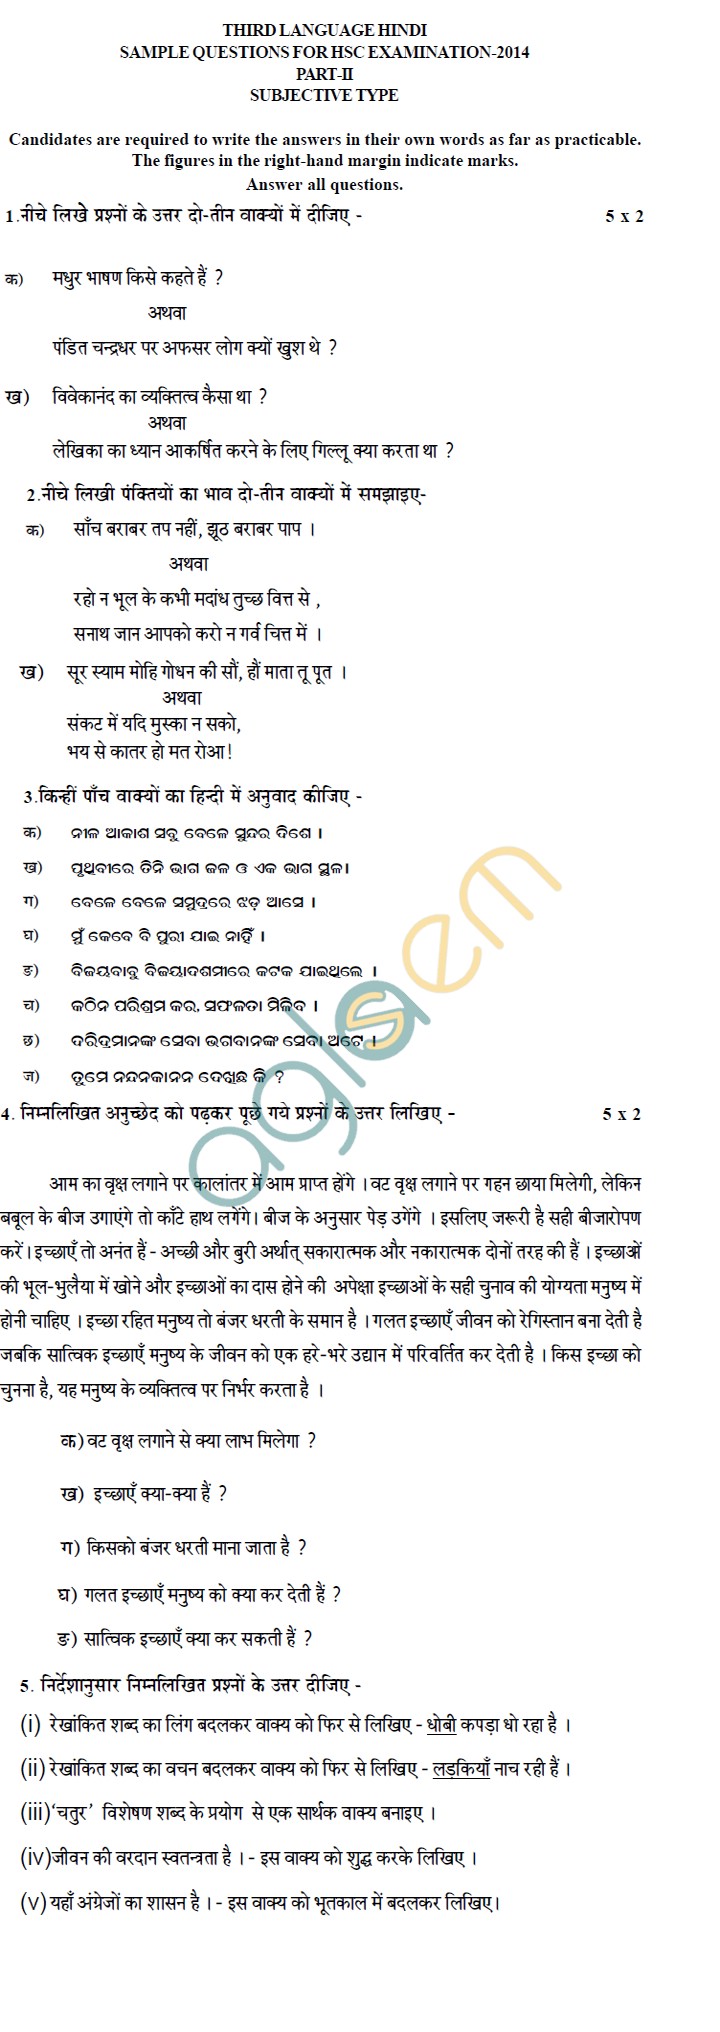 Odisha Board Sample Papers for HSC Exam 2014 - Hindi